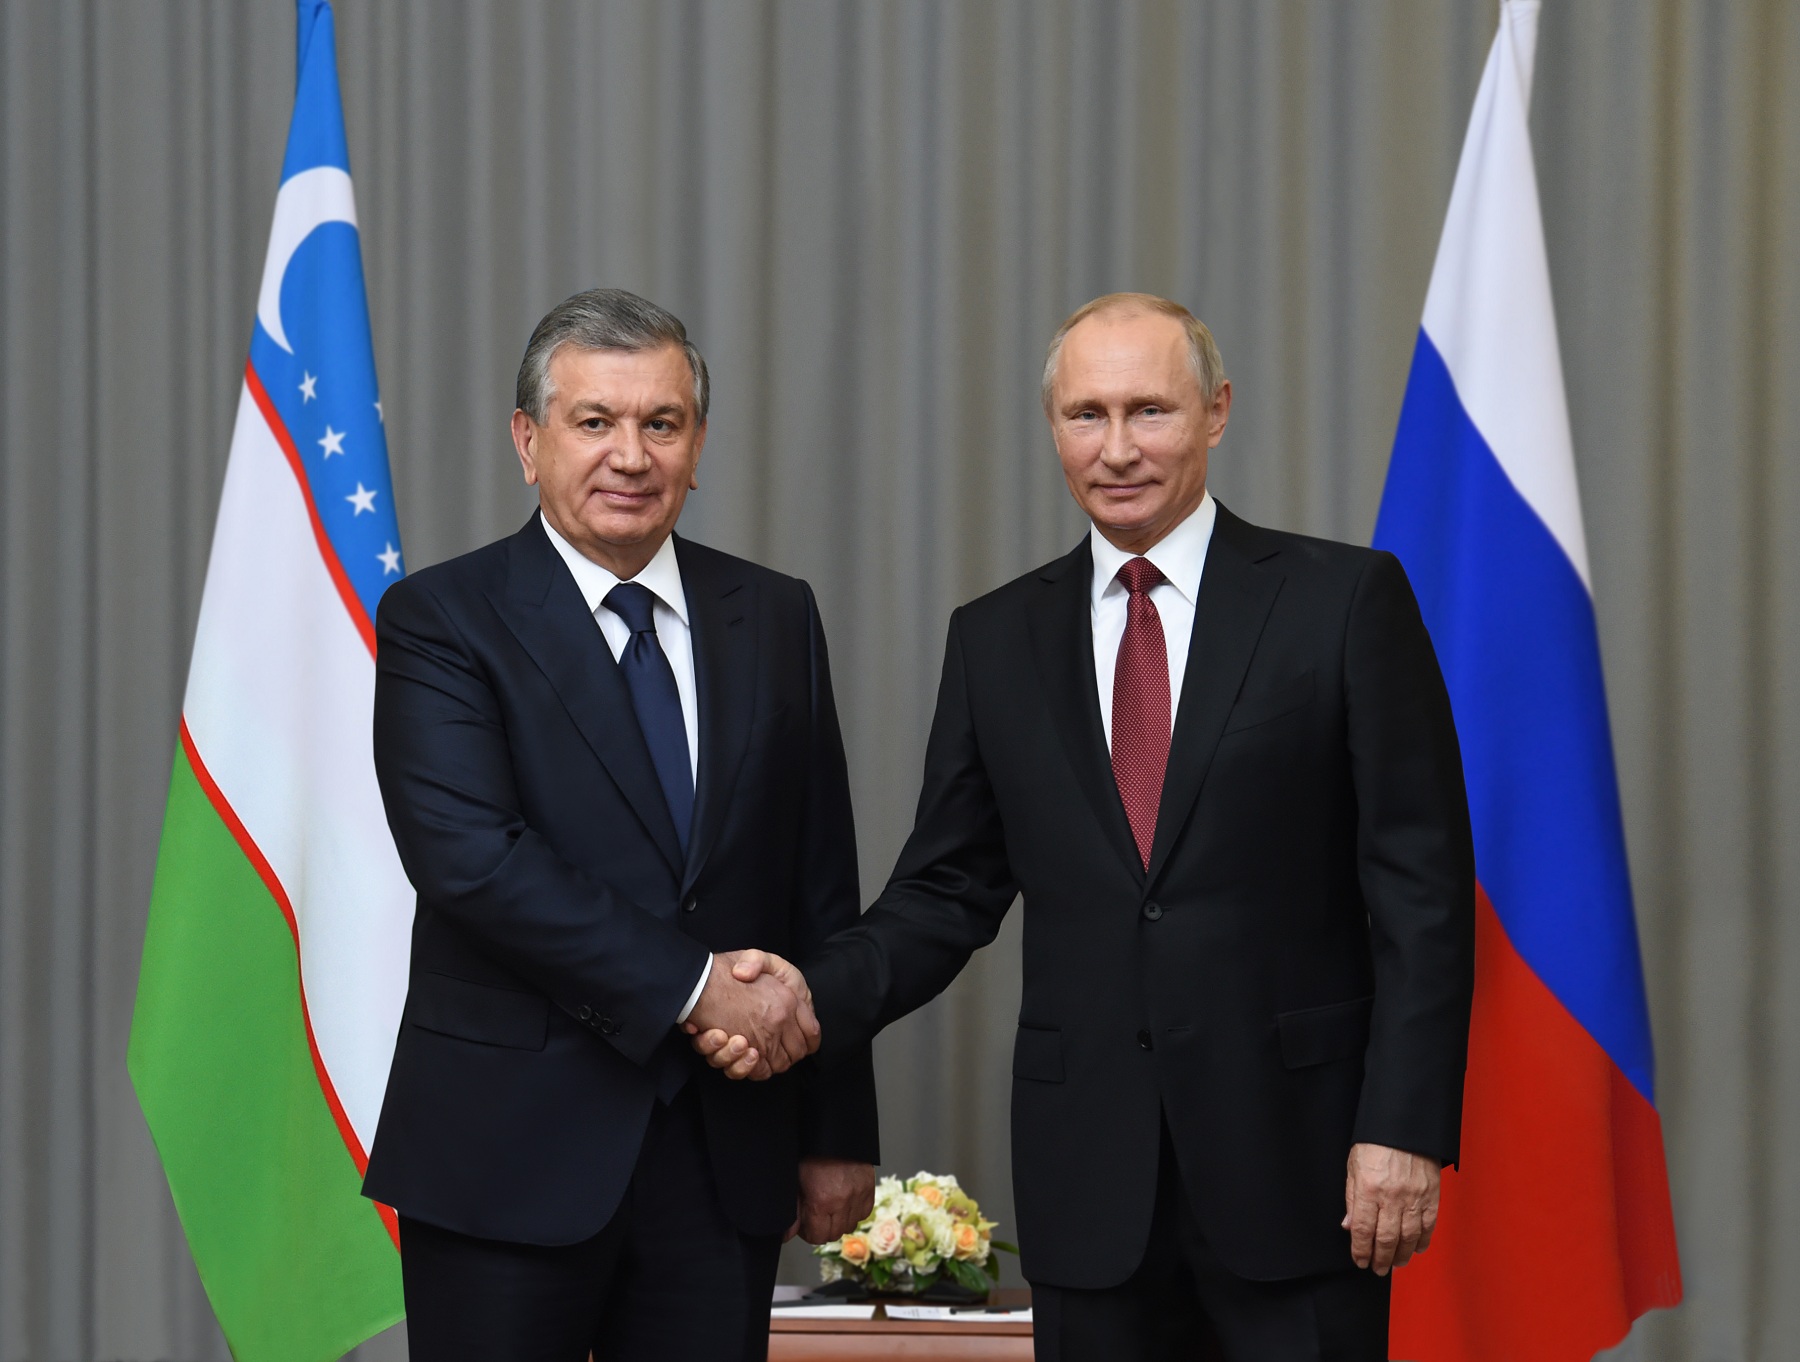 Prezident Shavkat Mirziyoyev Prezident Vladimir Putin bilan uchrashdi